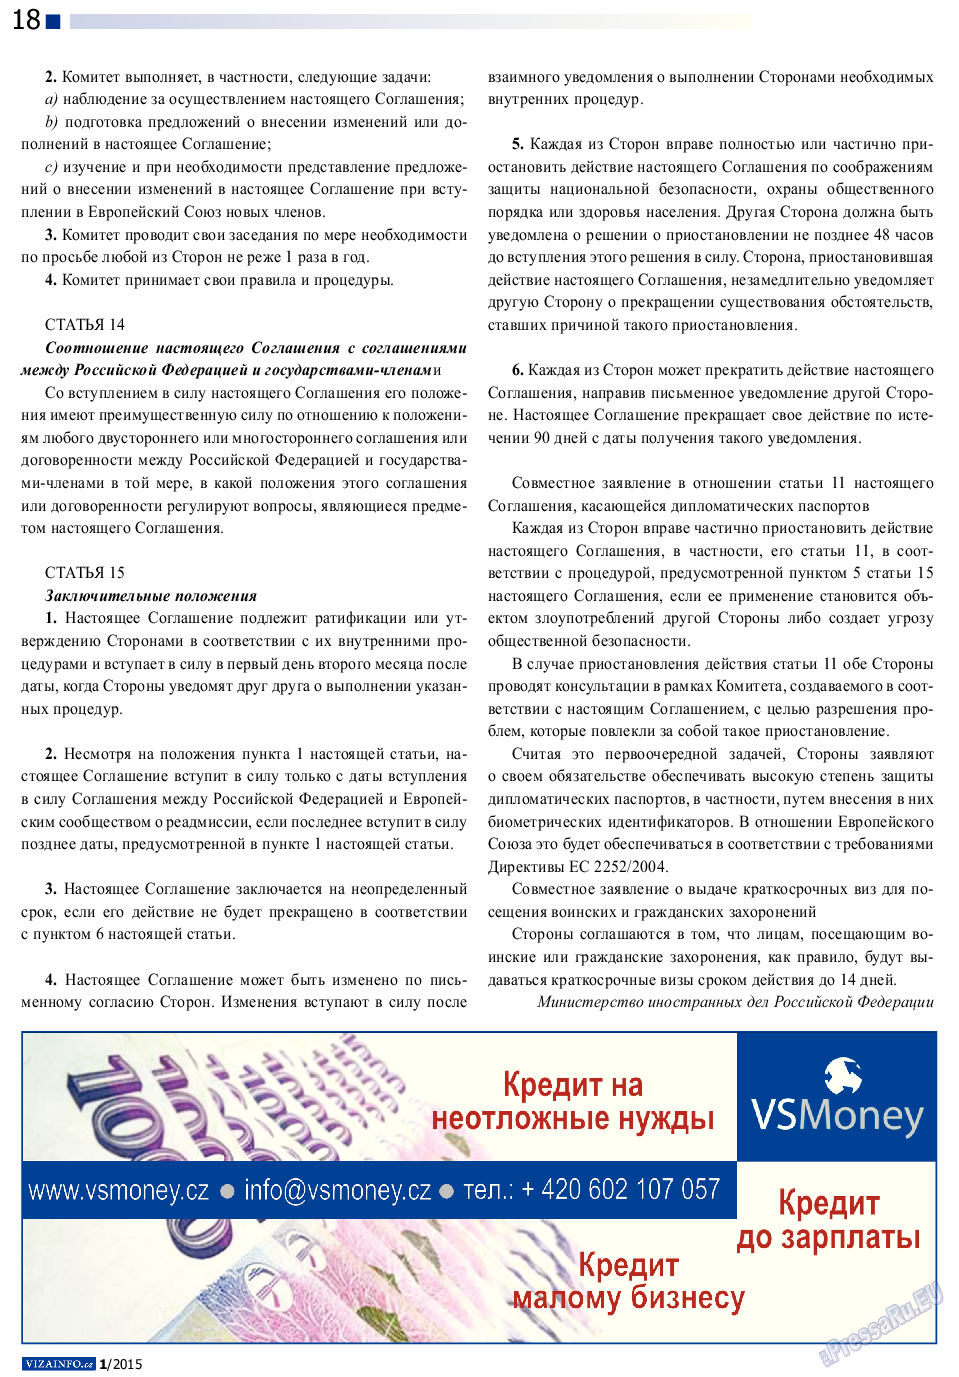 Vizainfo.cz, газета. 2014 №64 стр.18